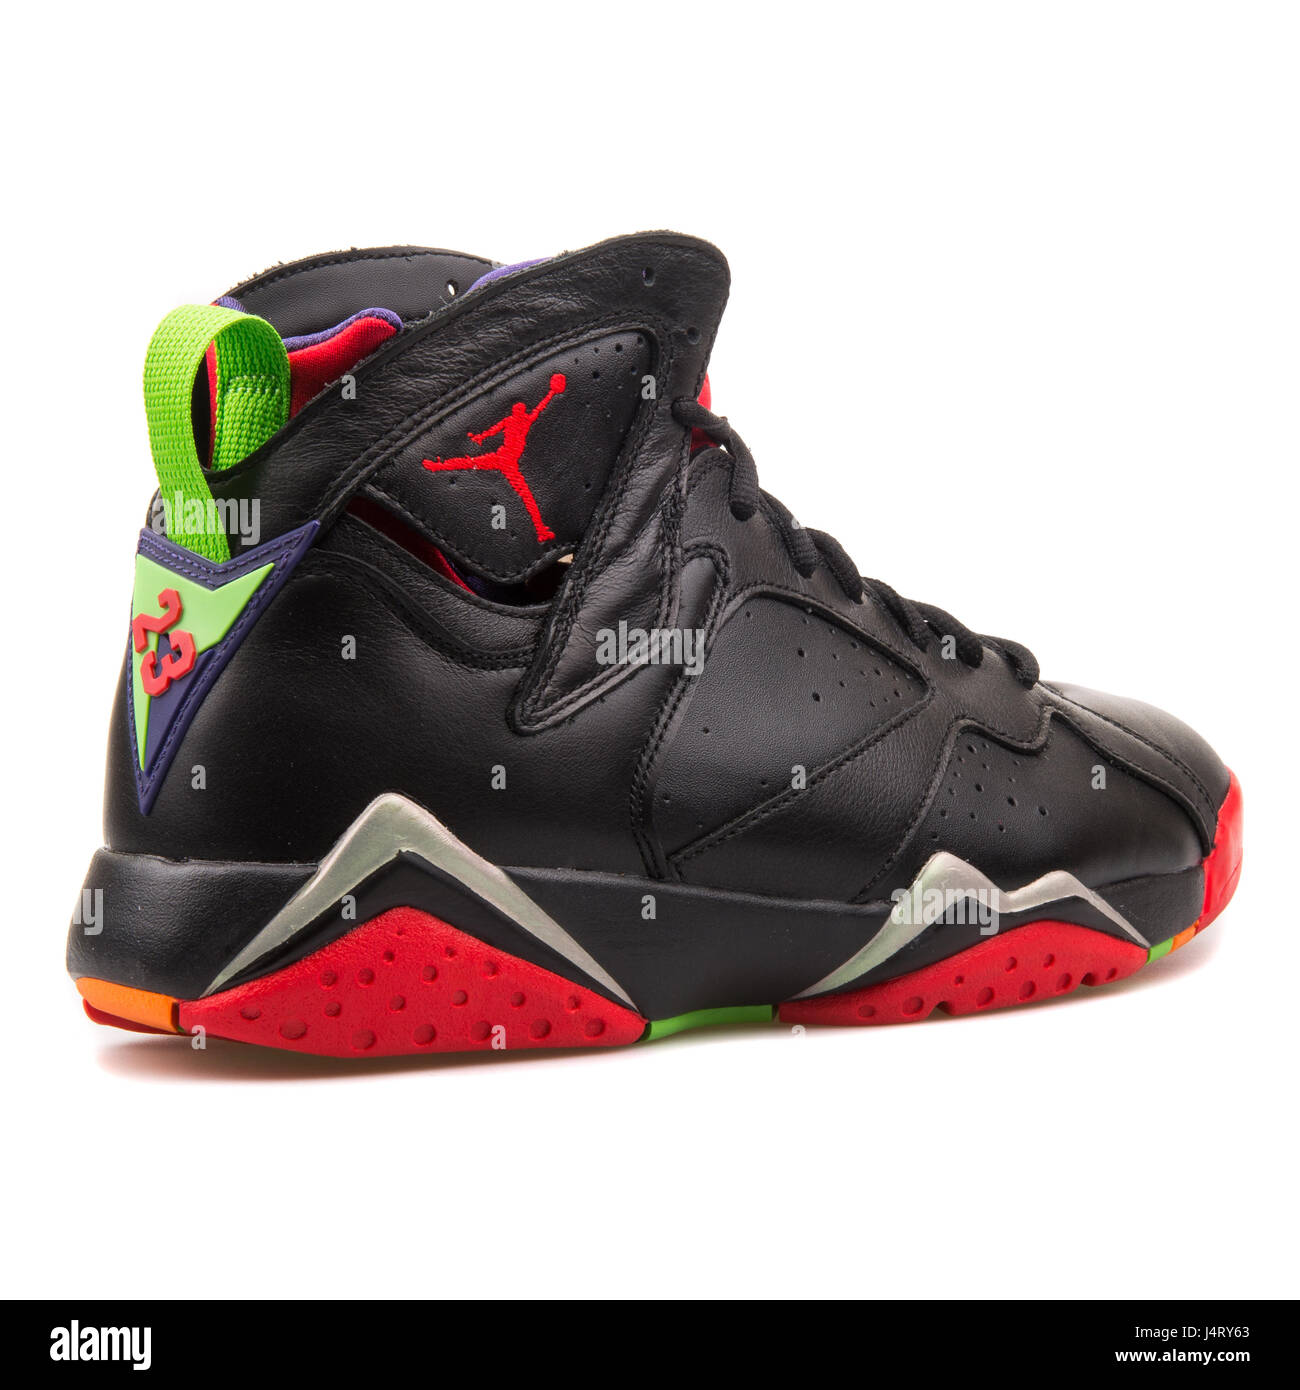 Nike Air Jordan 7 Retro - 304775-029 Photo Stock - Alamy